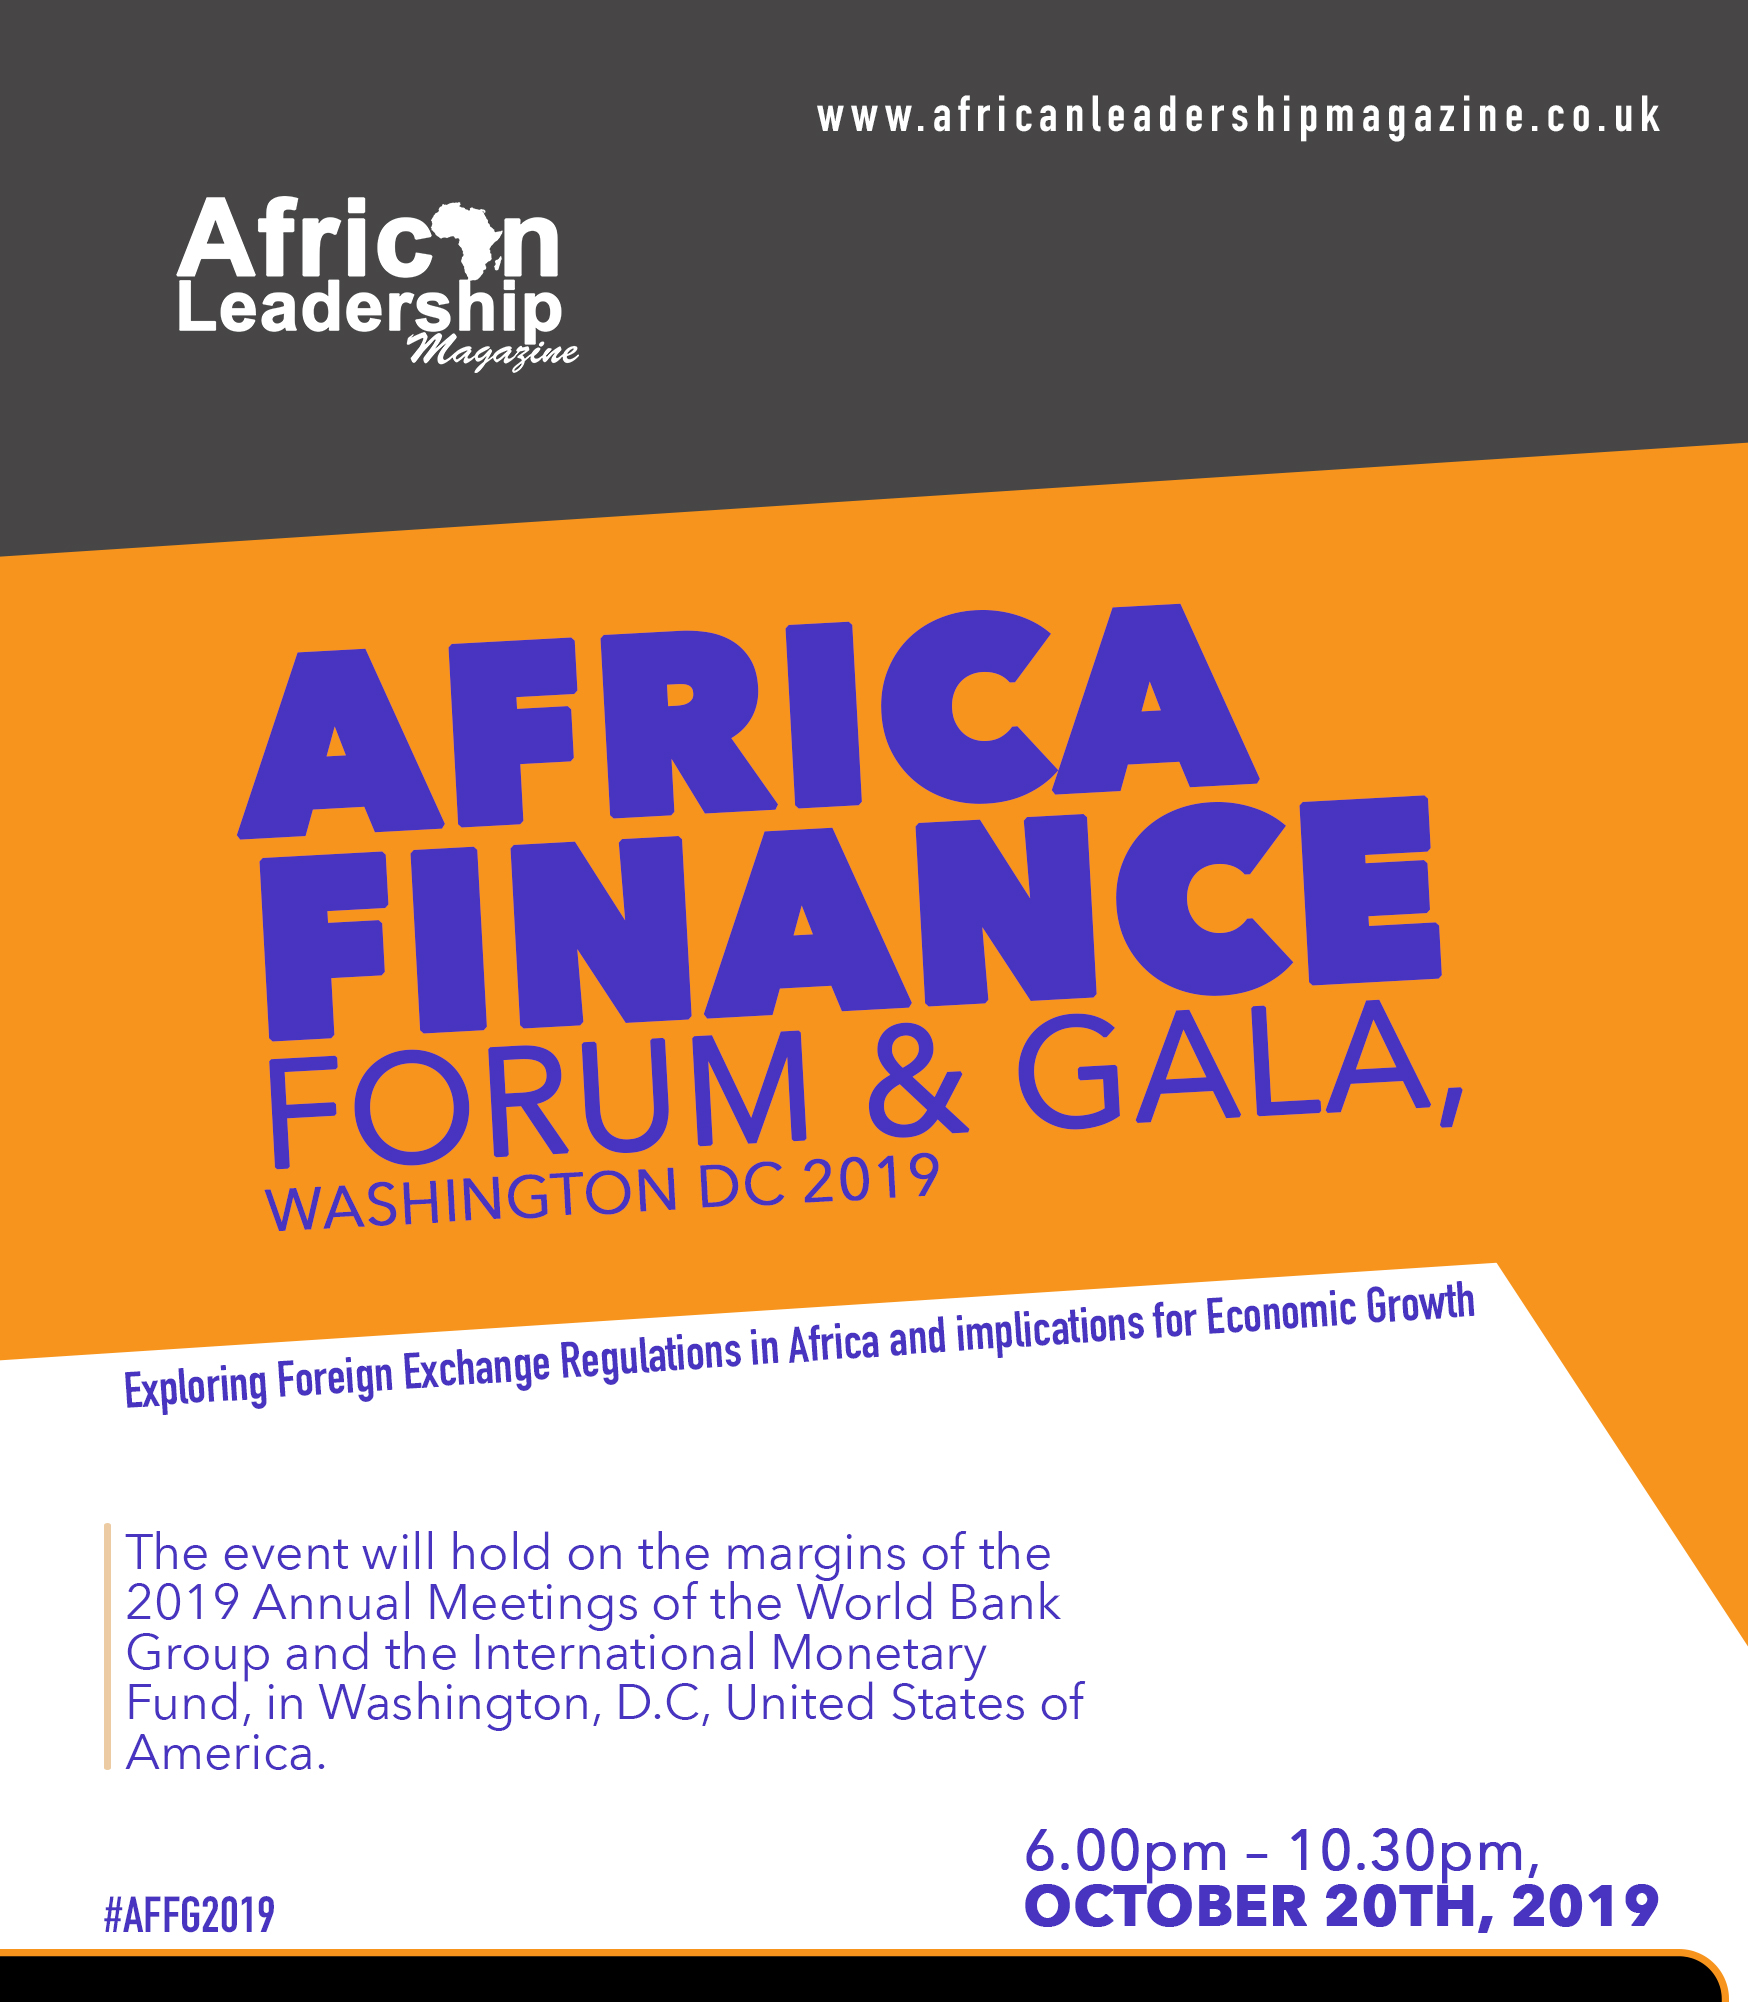 Africa Finance Forum & Gala, Washington DC 2019